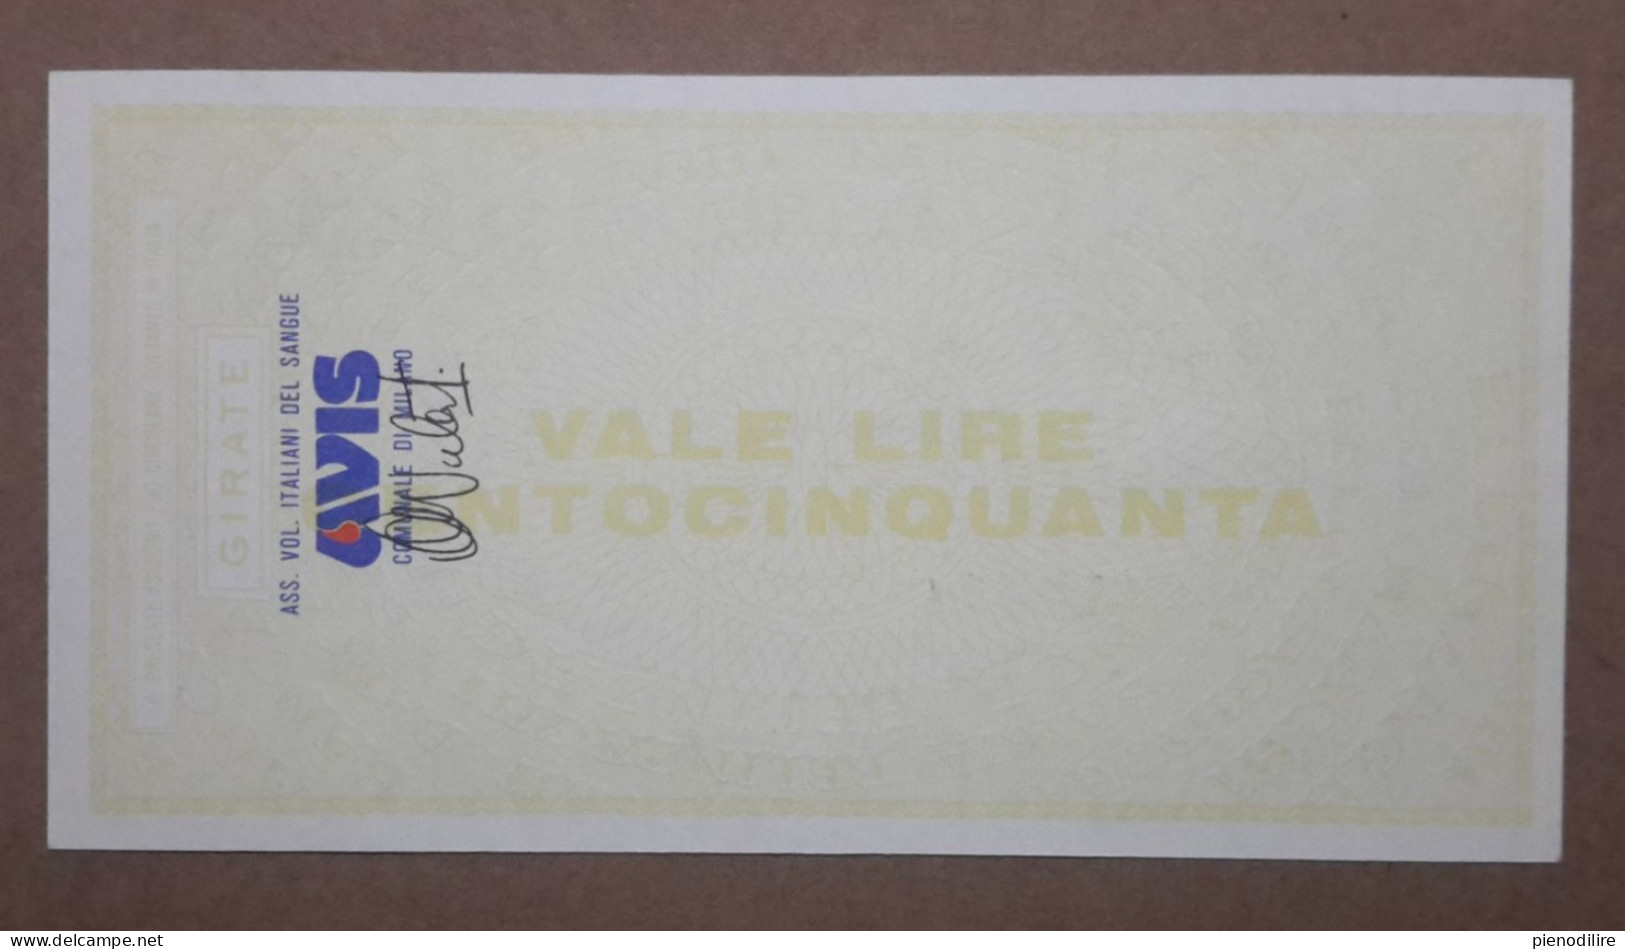 BANCA BELINZAGHI, 150 LIRE 30.06.1977 A.V.I.S. MILANO (A1.92) - [10] Cheques En Mini-cheques